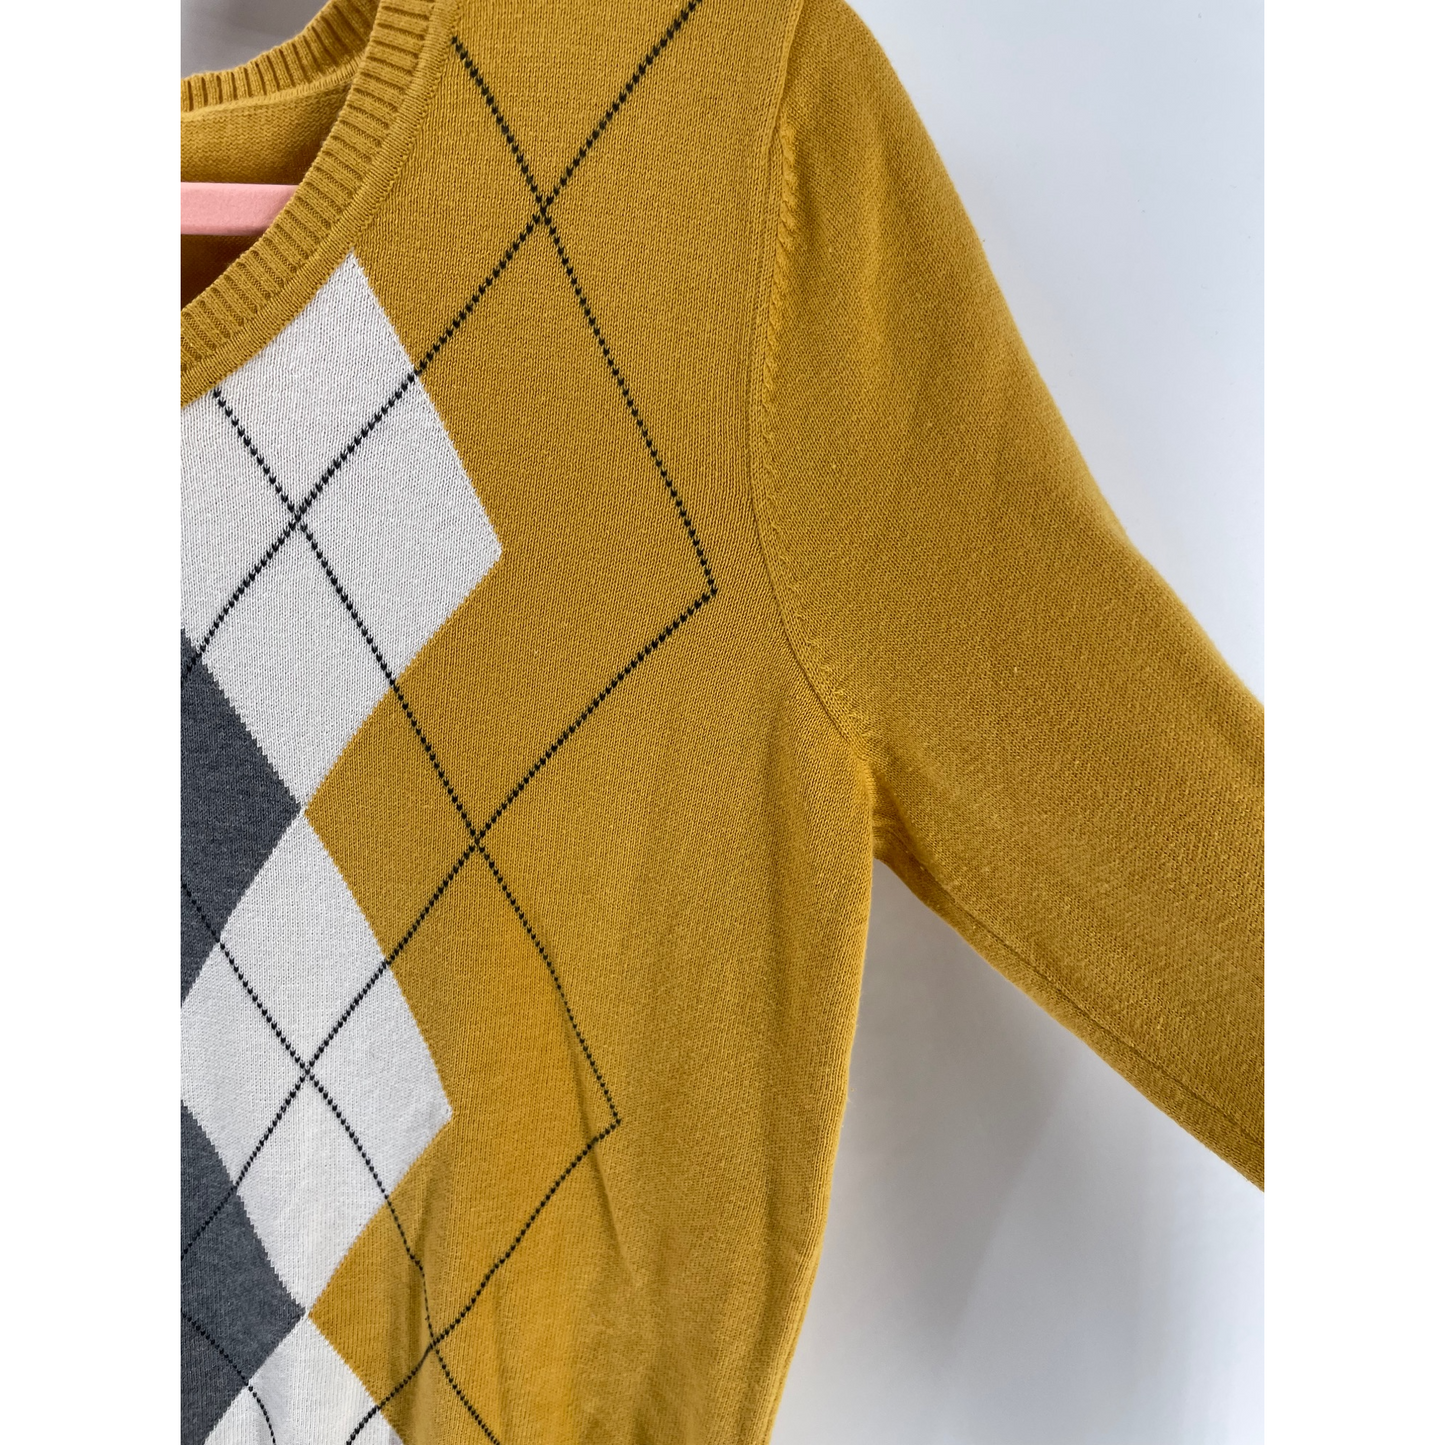 Women’a Medium Mustard Yellow V-Neck Argyle Sweater